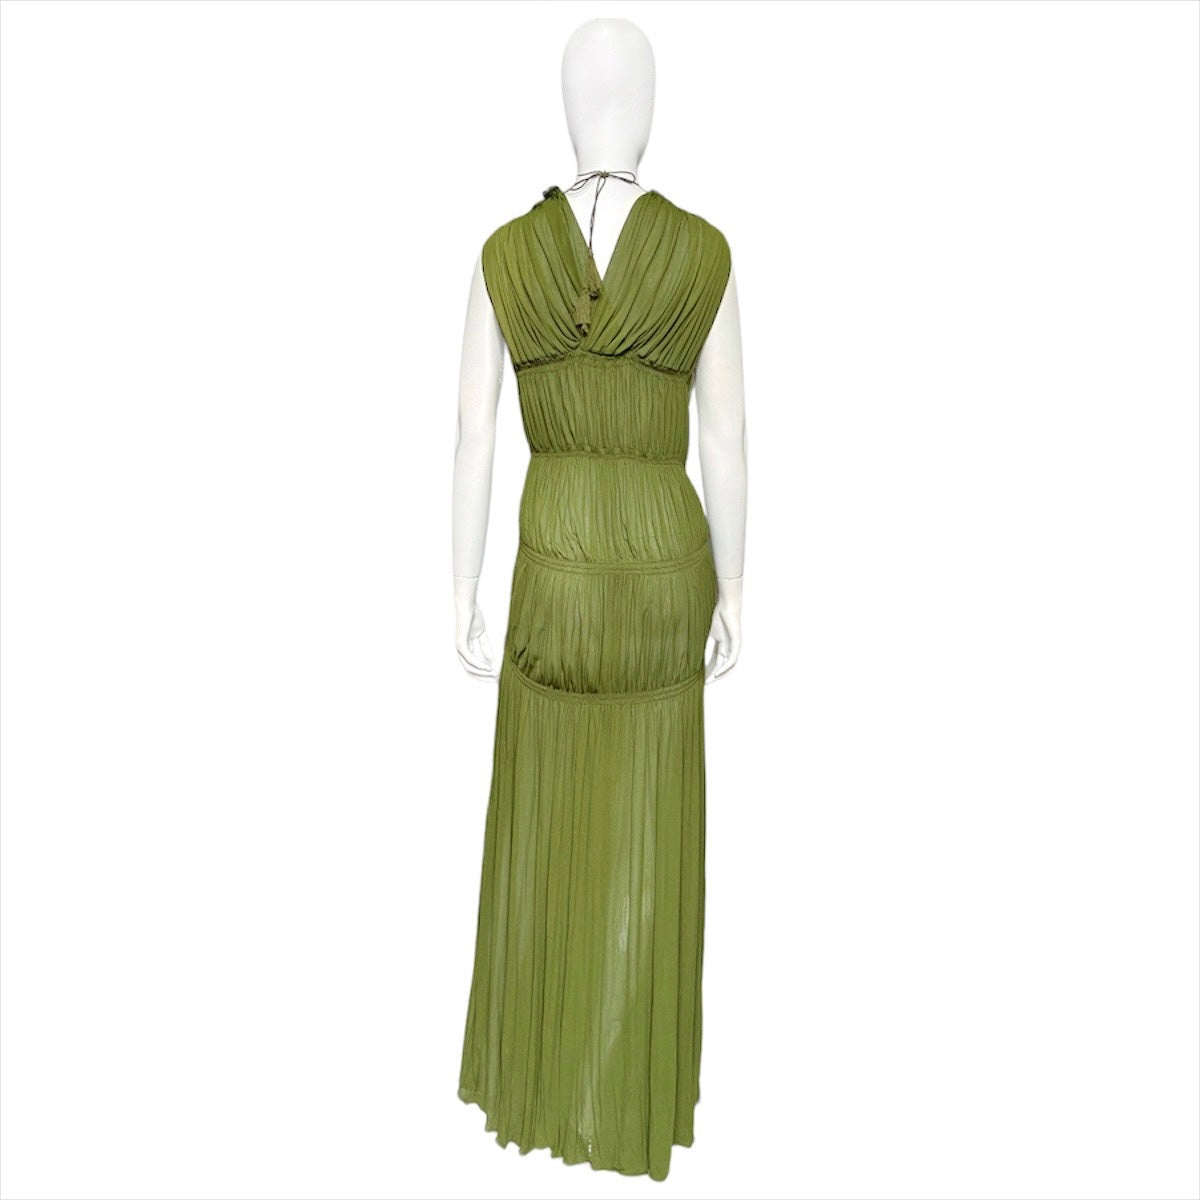 Jean Paul Gaultier spring 2011 green pleated ruffles maxi dress - 6